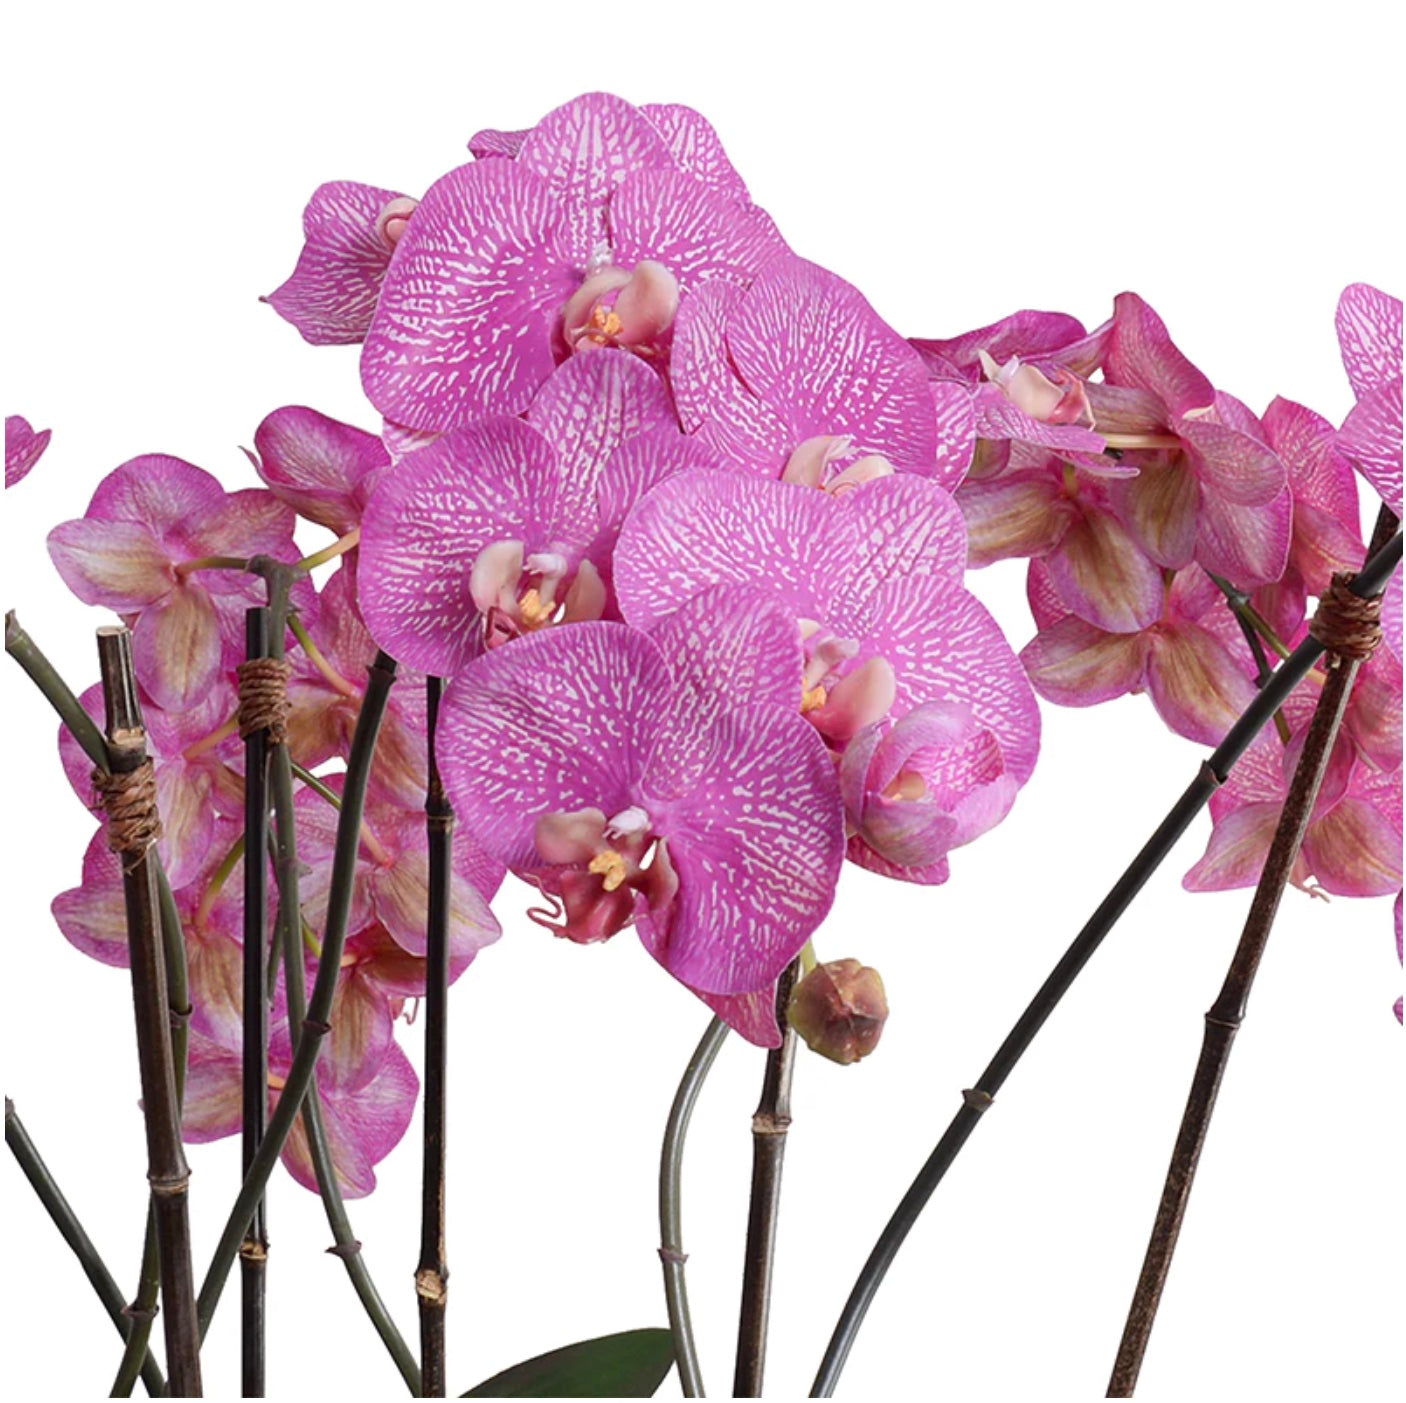 Orchid x6 Centerpiece - Fuchsia / Black